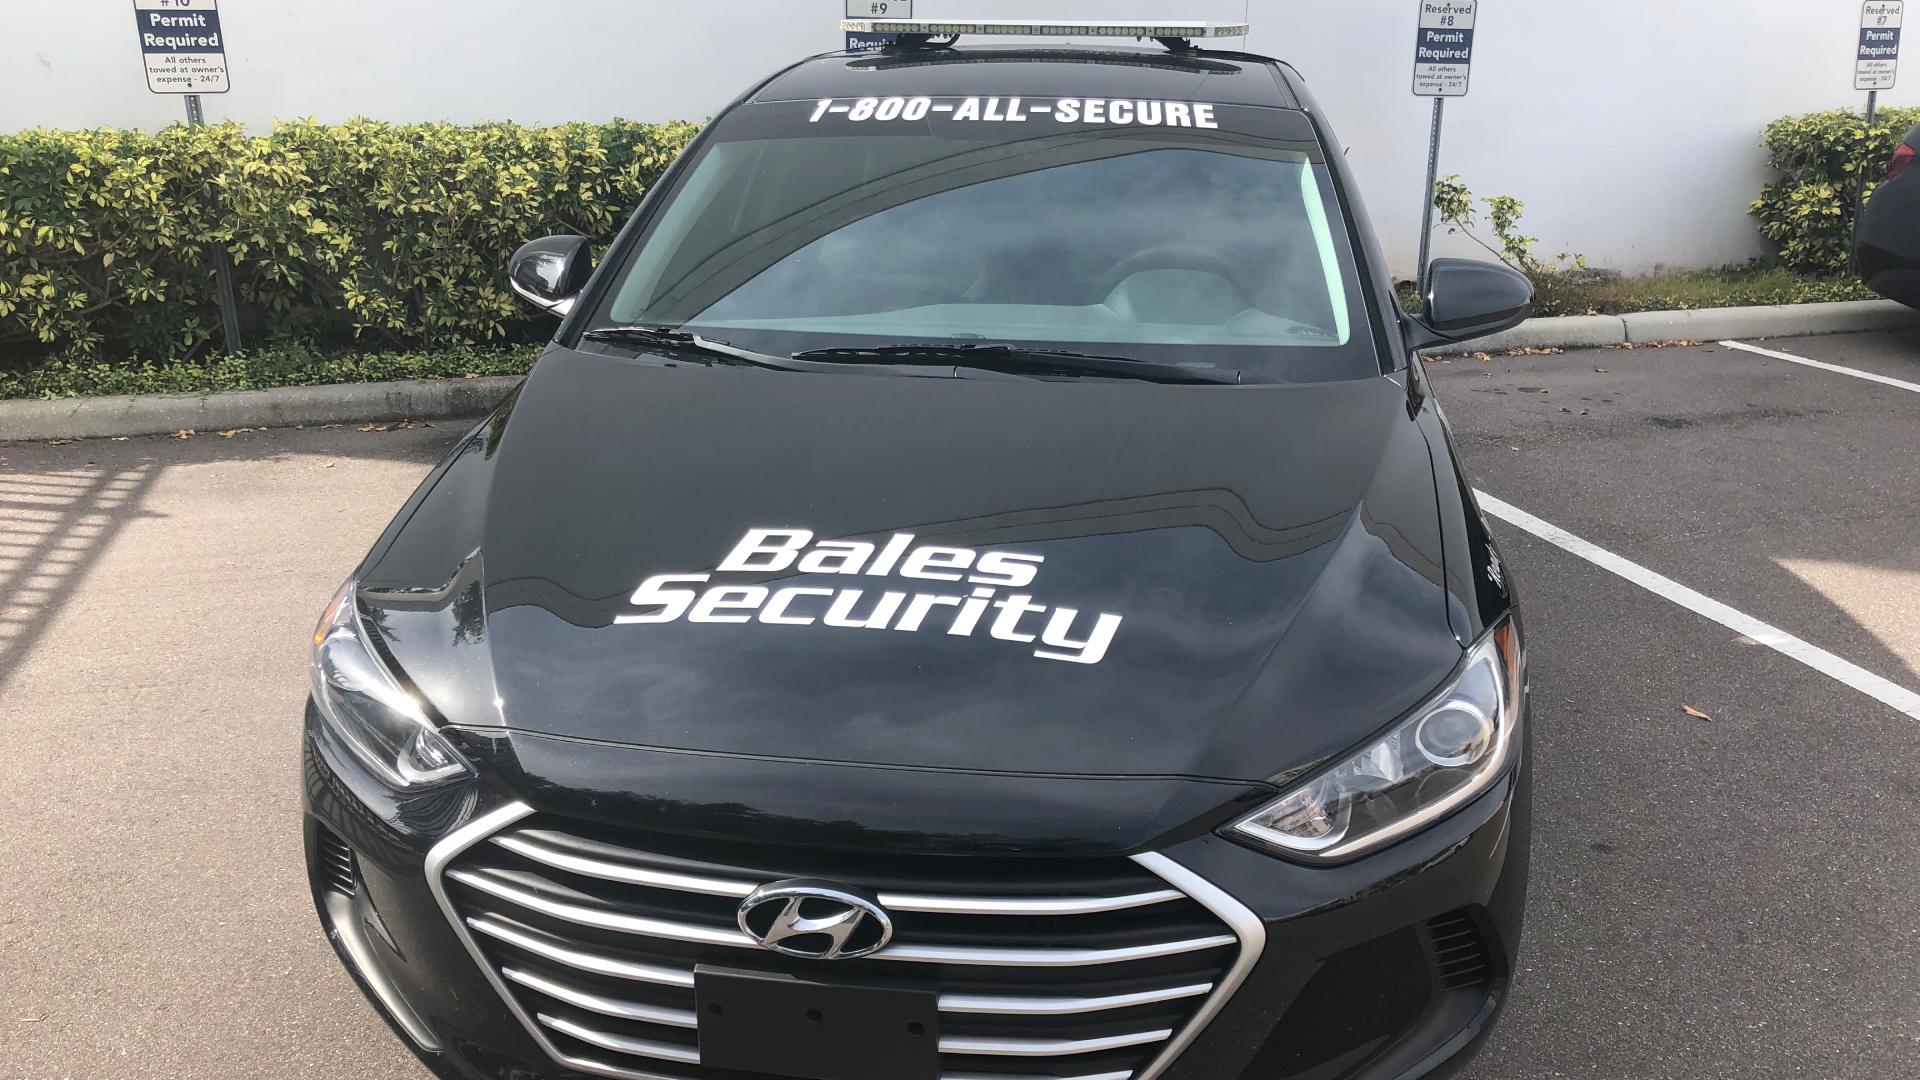 Bales Security work car displayed in parking lot in Brandon, FL.